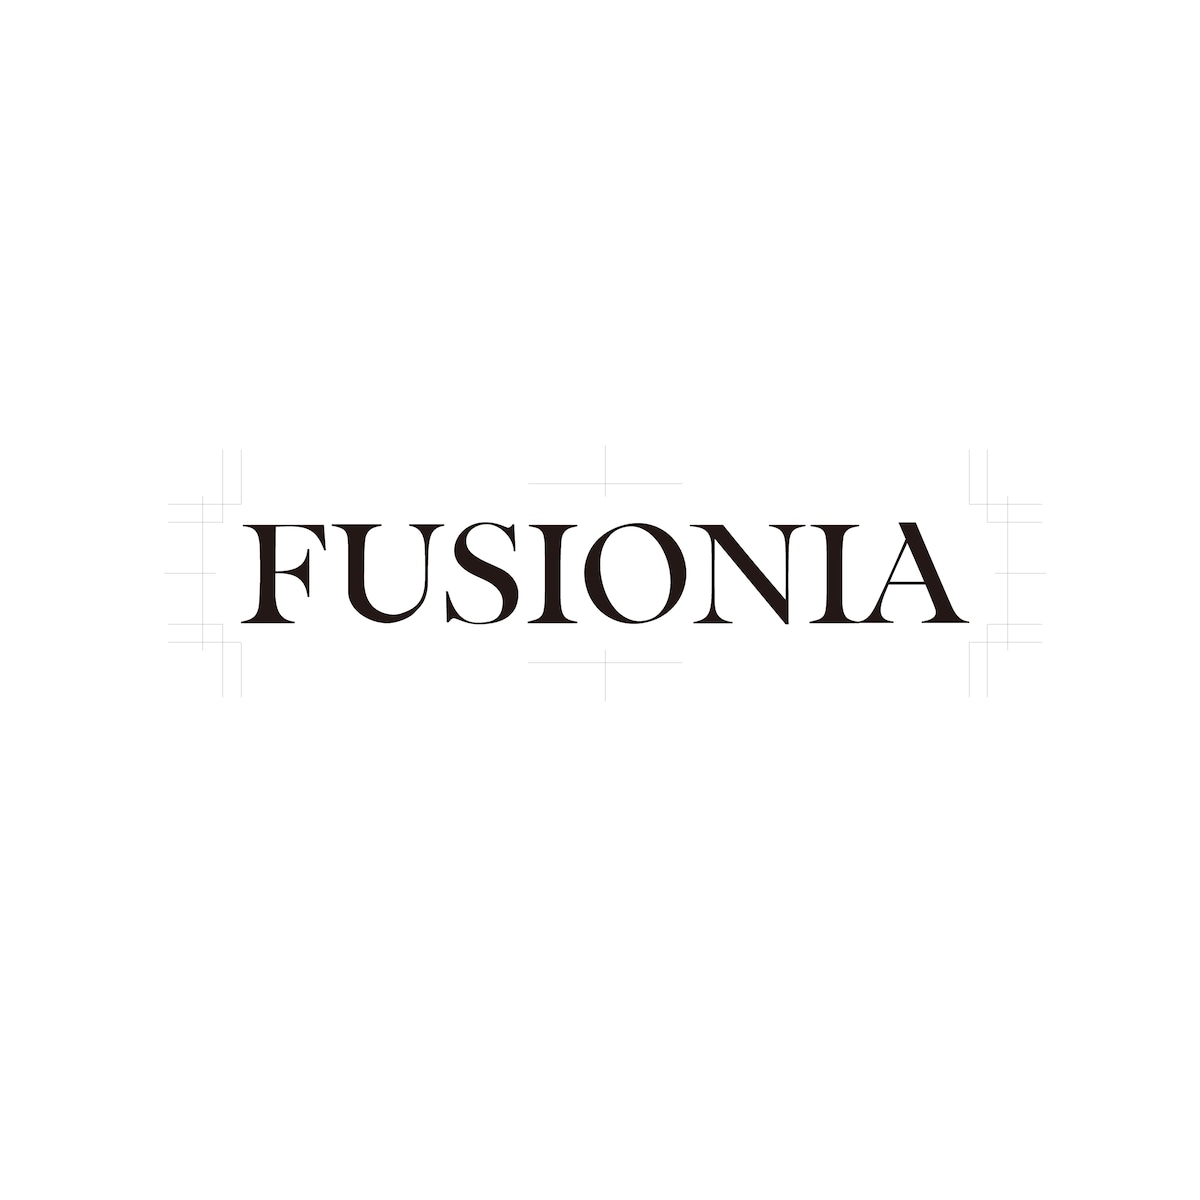 FUSIONIA株式会社のロゴデザイン作成